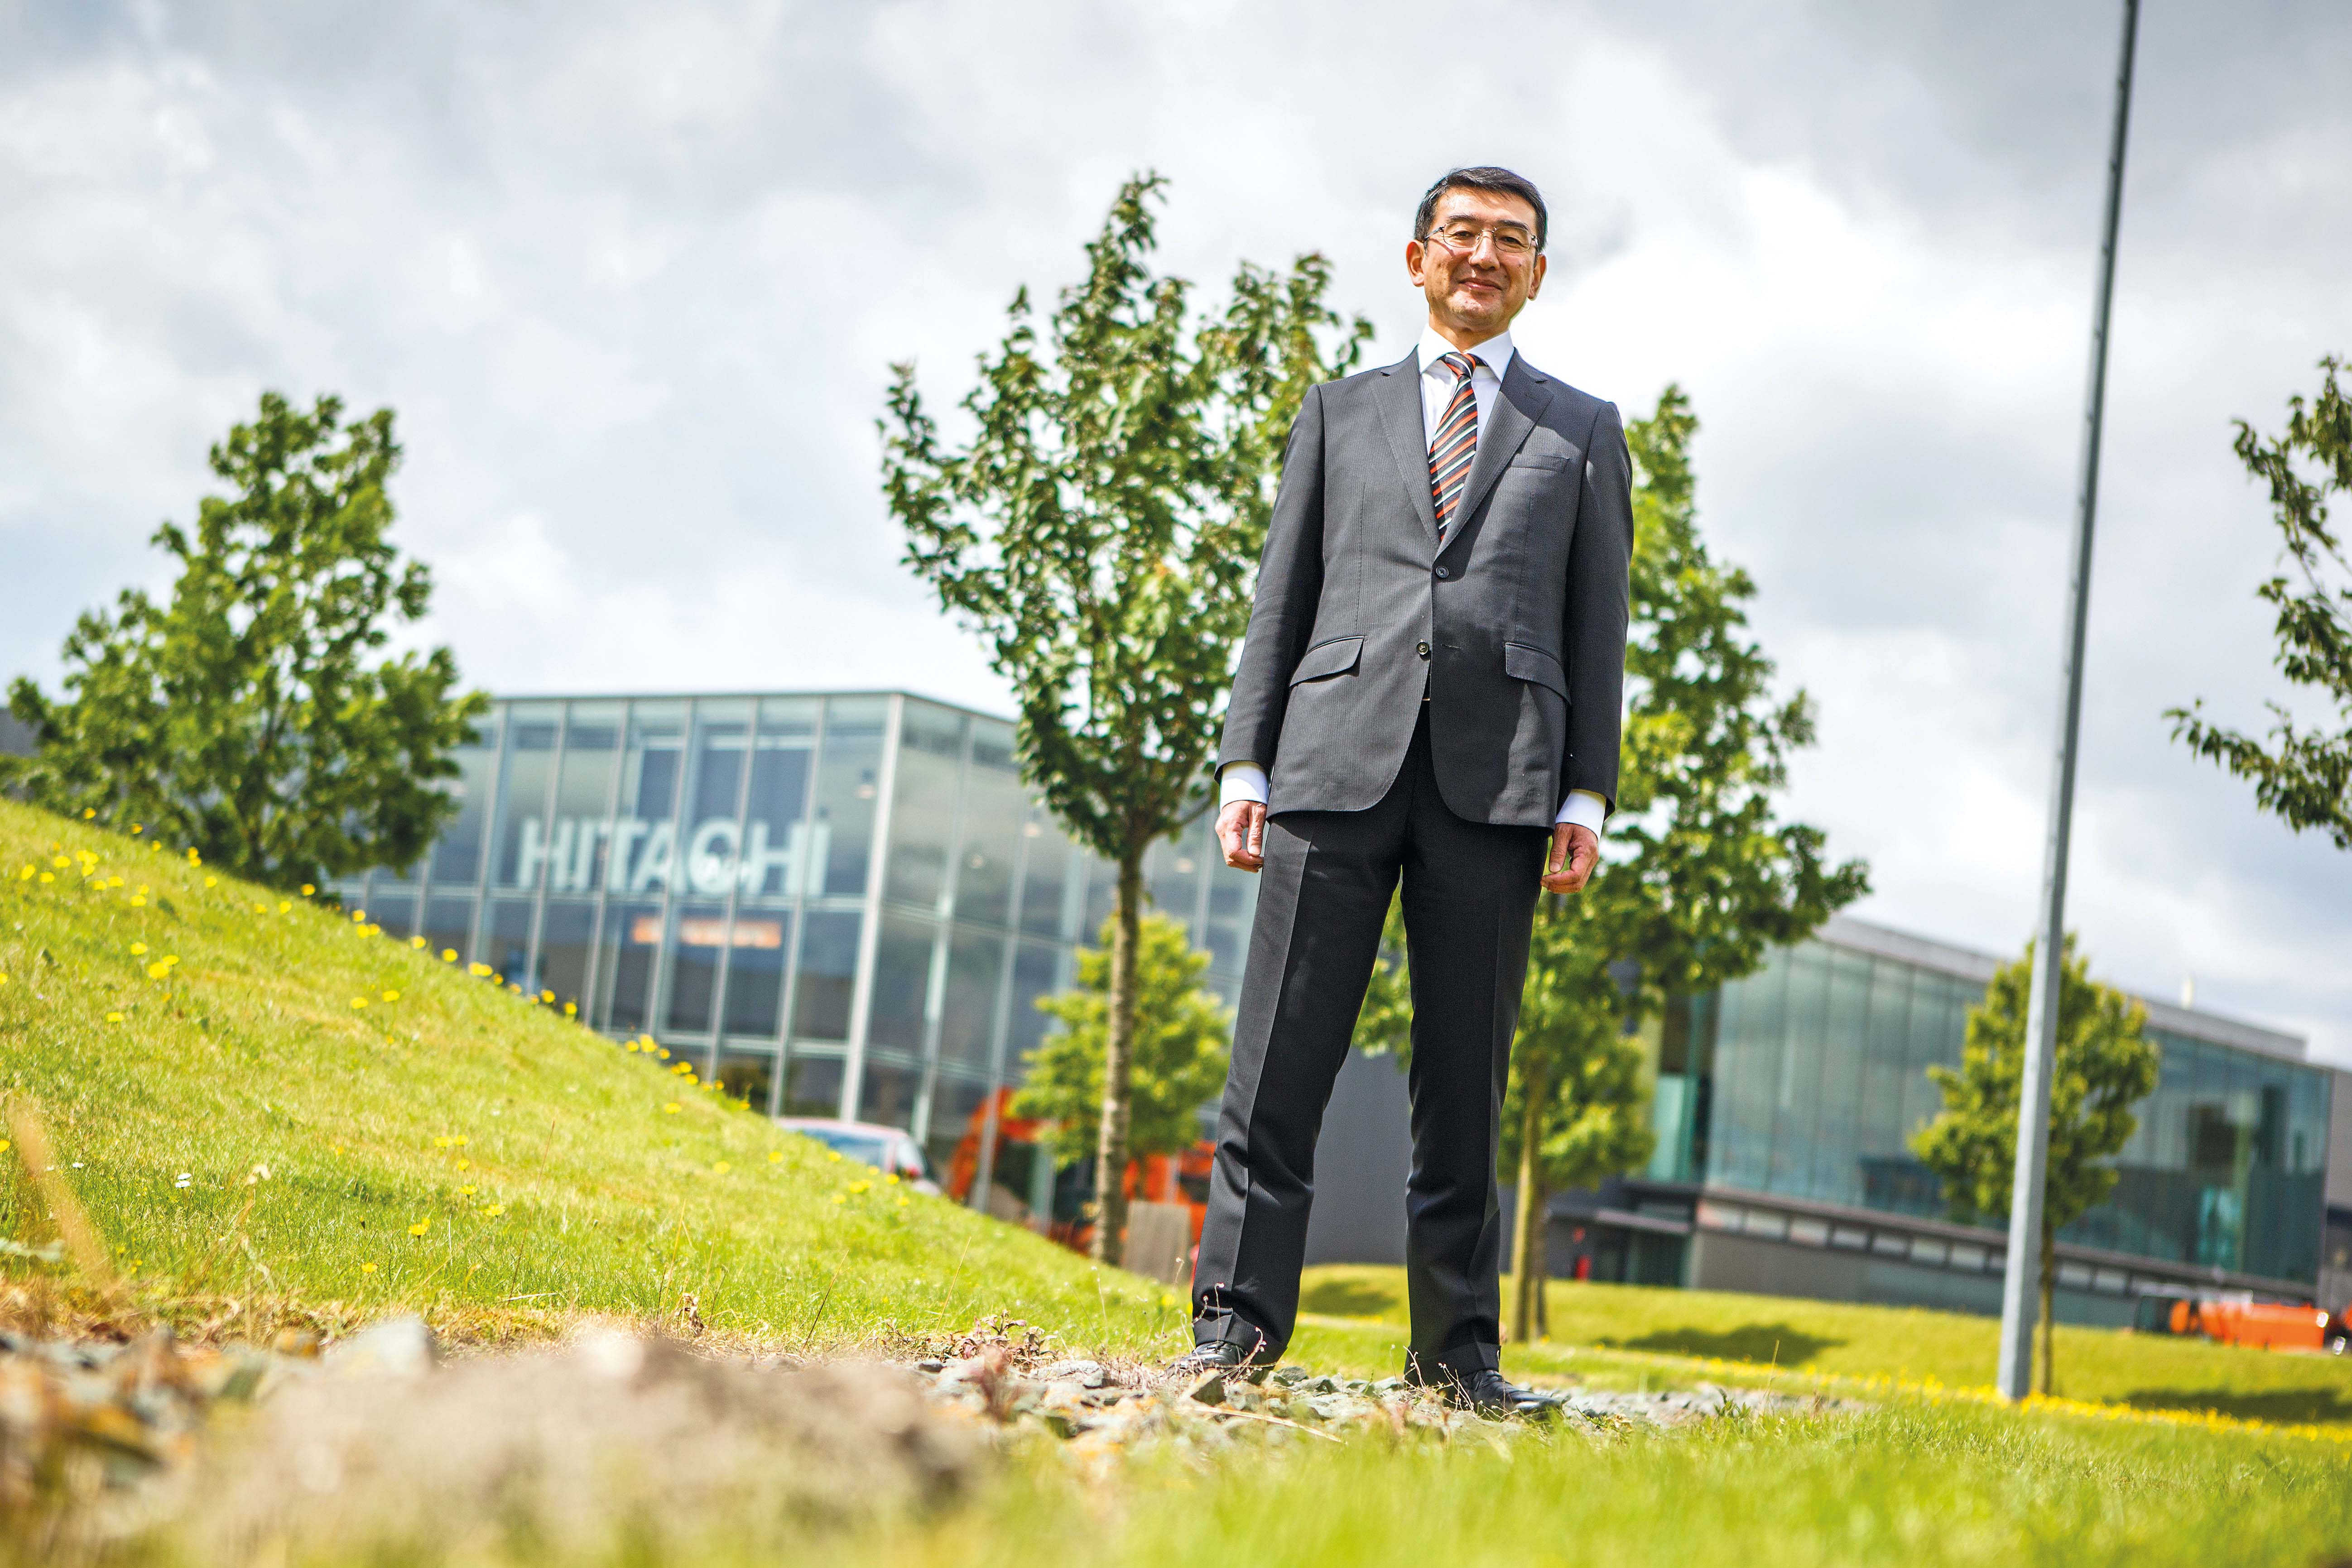 Moriaki Kadoya, Hitachi CEO and President